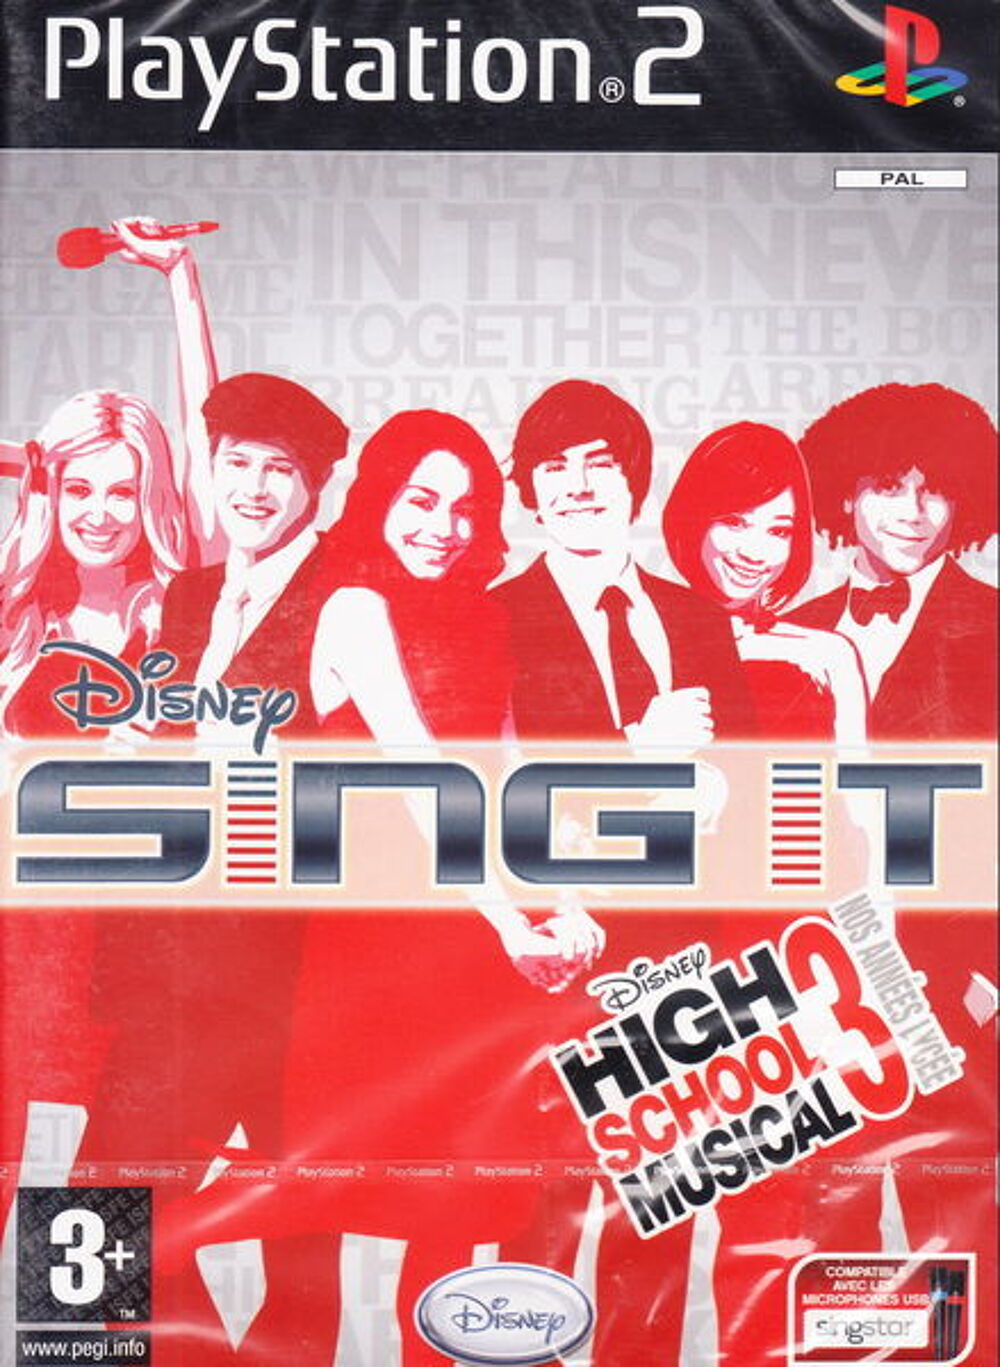 PS2 jeu Disney Sing It High School Musical 3 NEUF blister
Consoles et jeux vidos